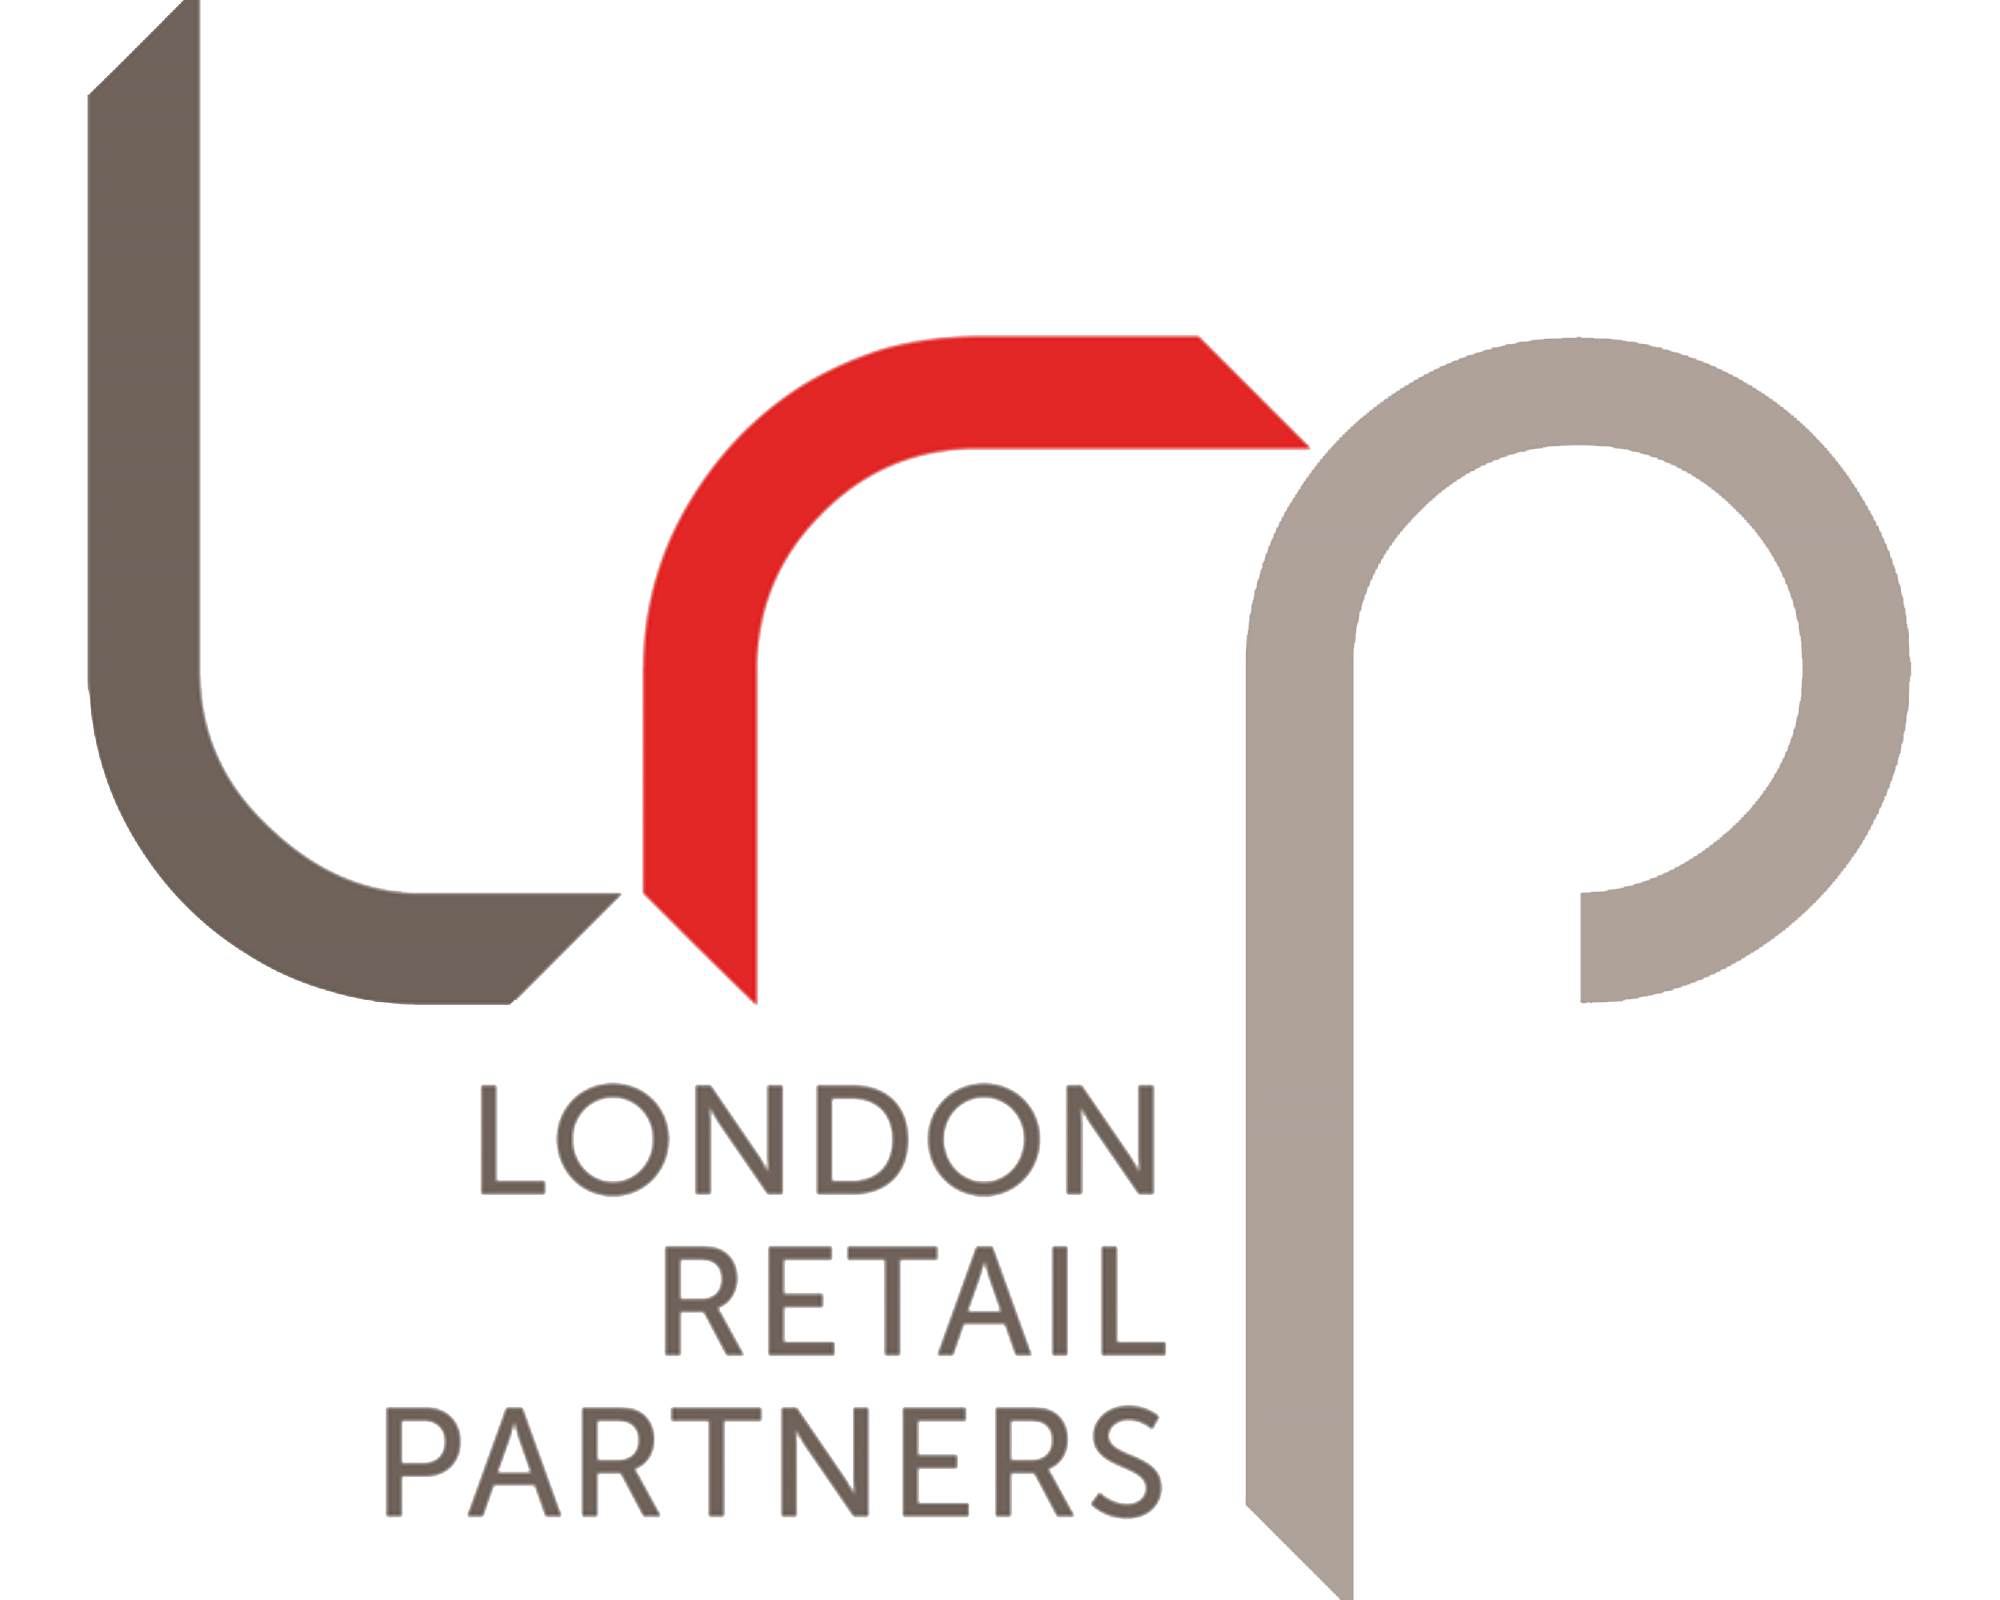 London Retail Partners